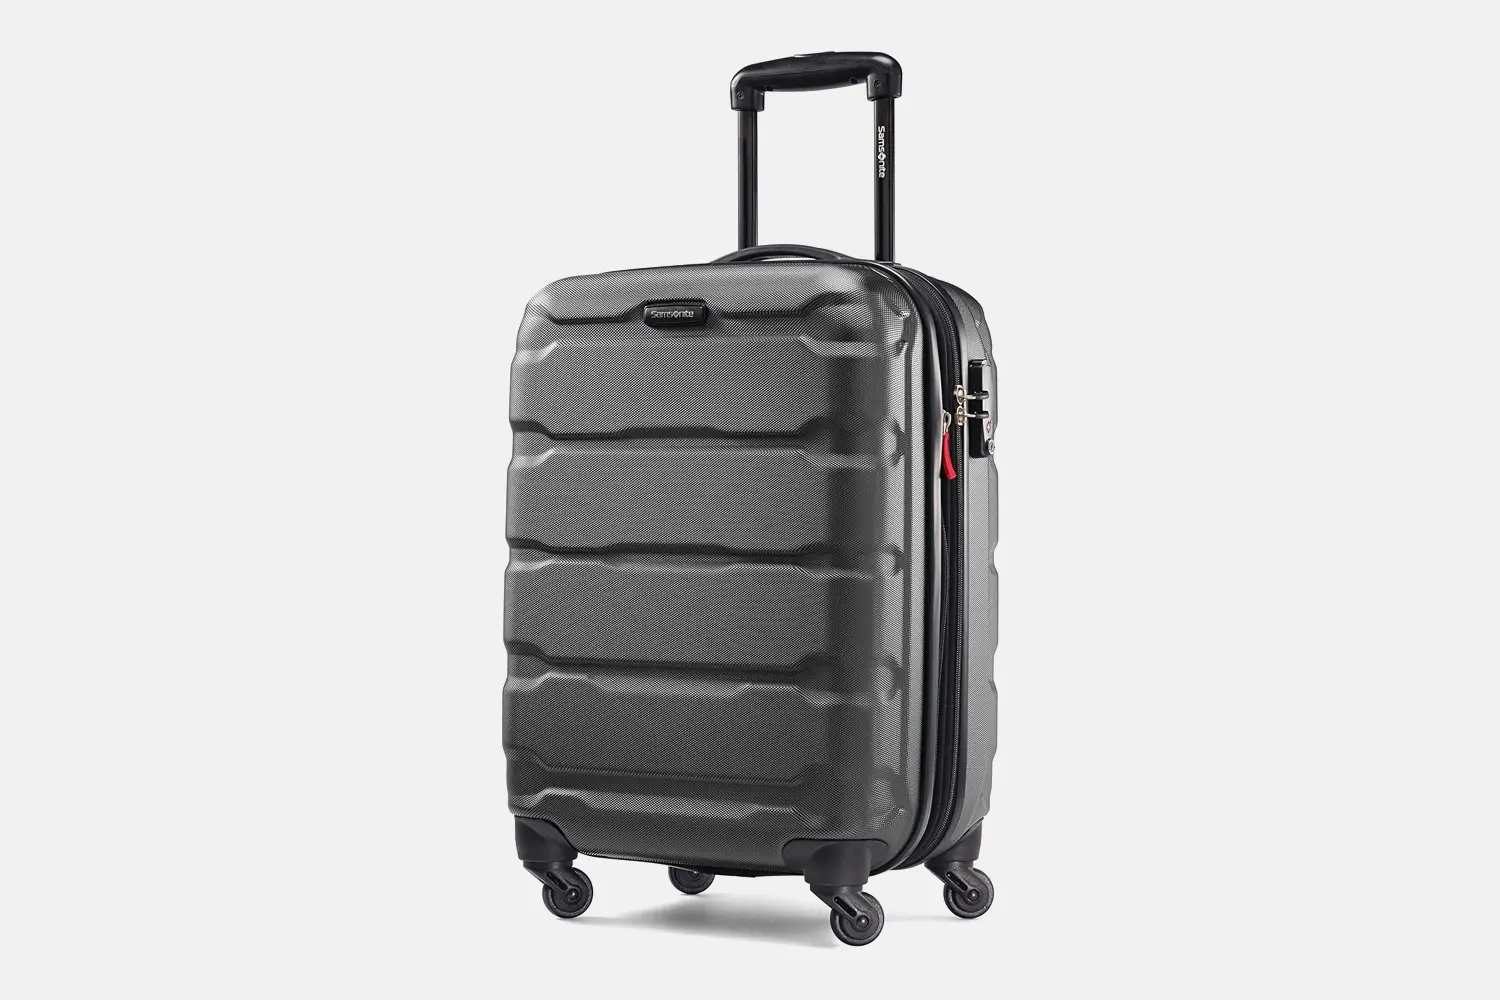 Samsonite Omni PC Carry-on Luggage